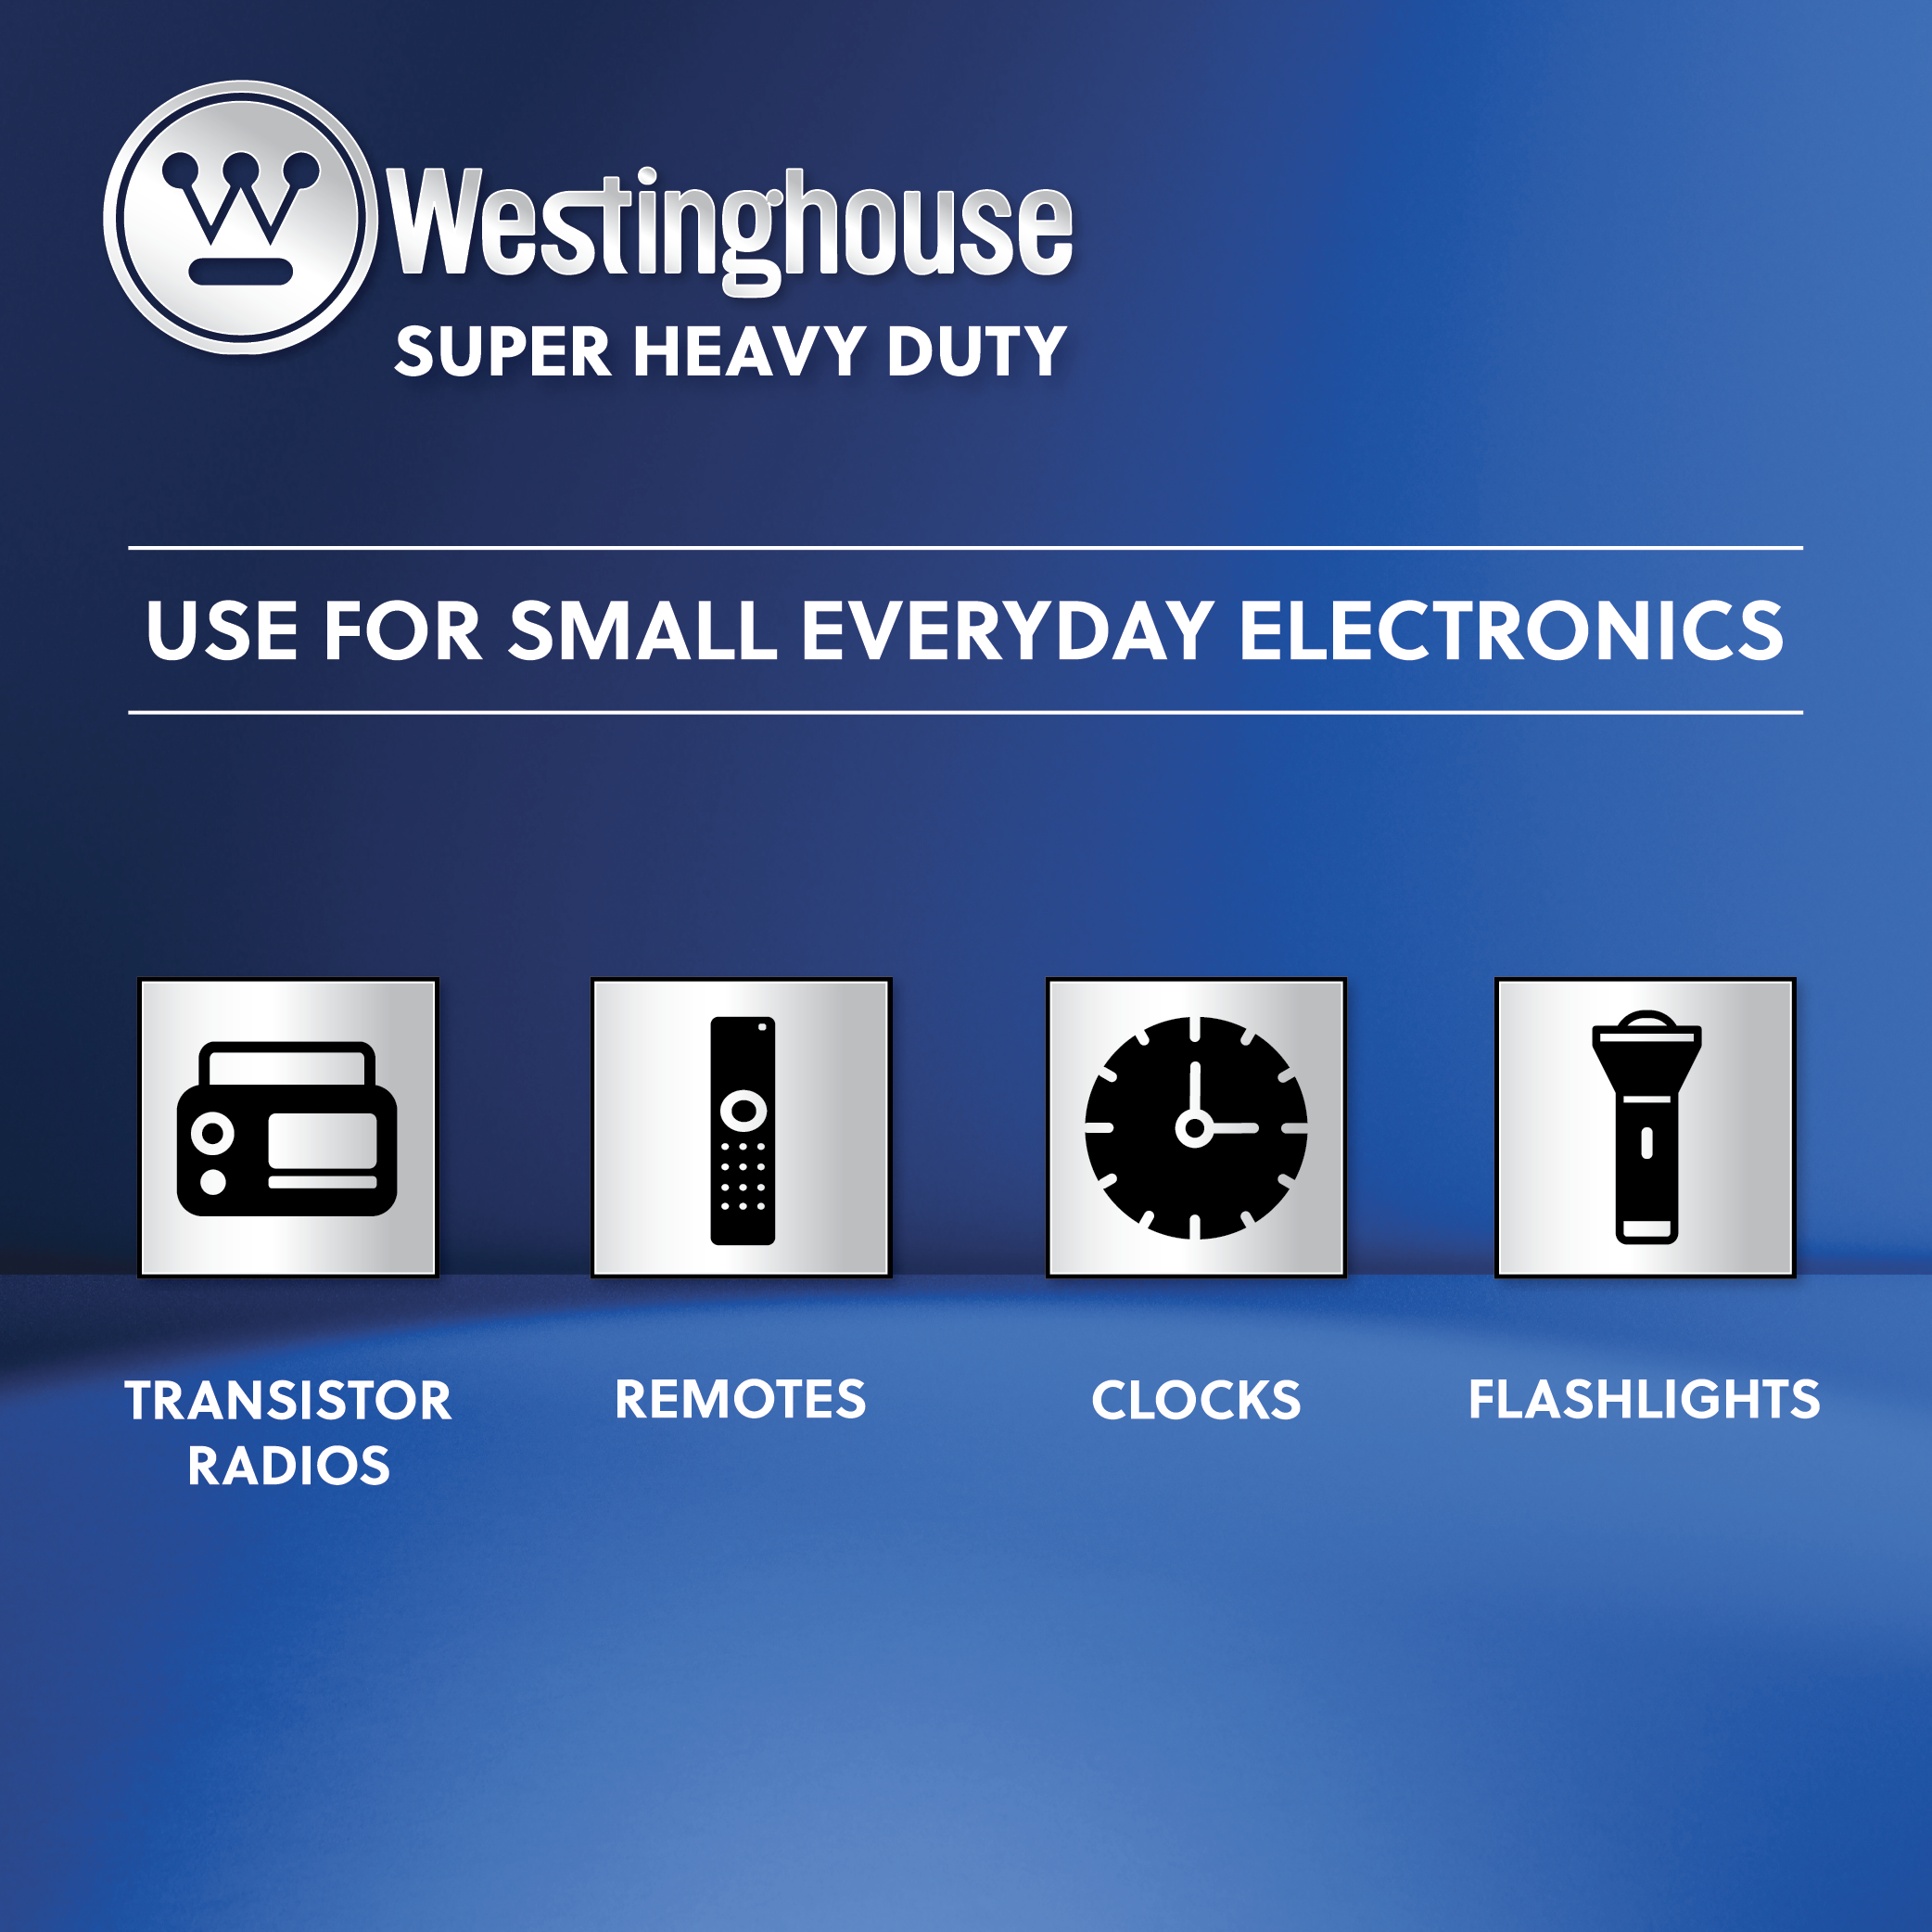 Westinghouse AAA Super Heavy Duty 24pk Tub